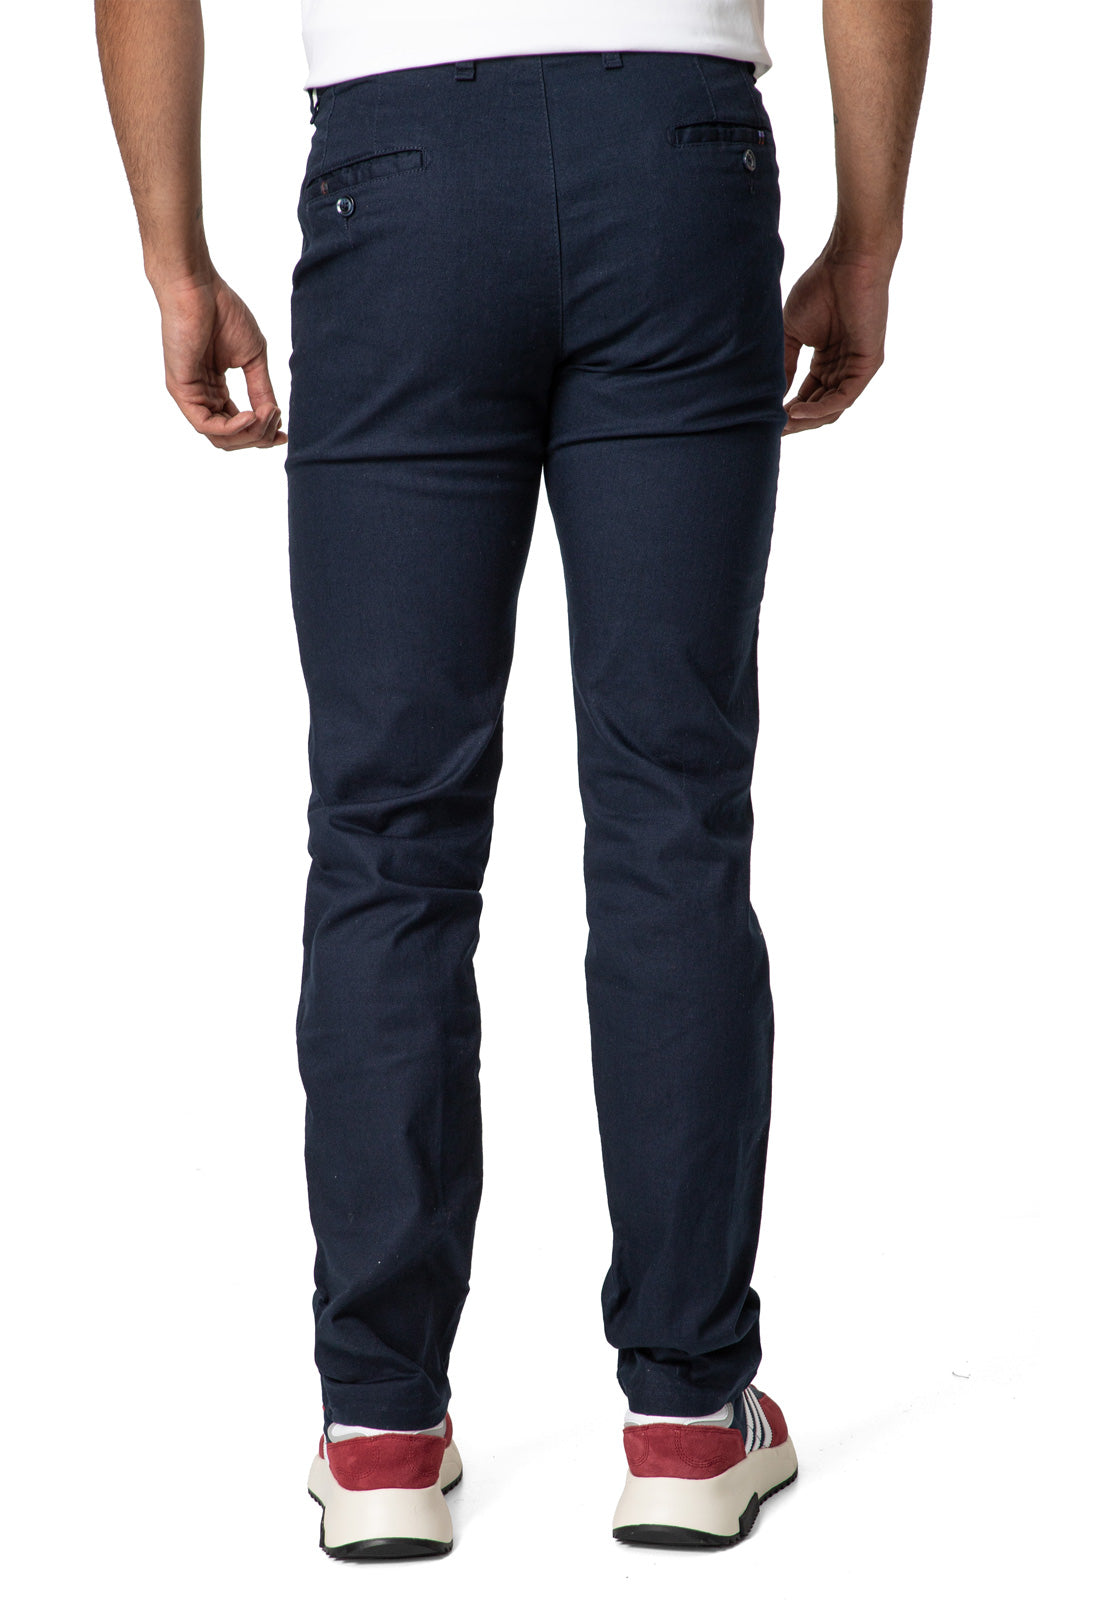 El pantalon drill azul, es una prenda masculina símbolo del estilo